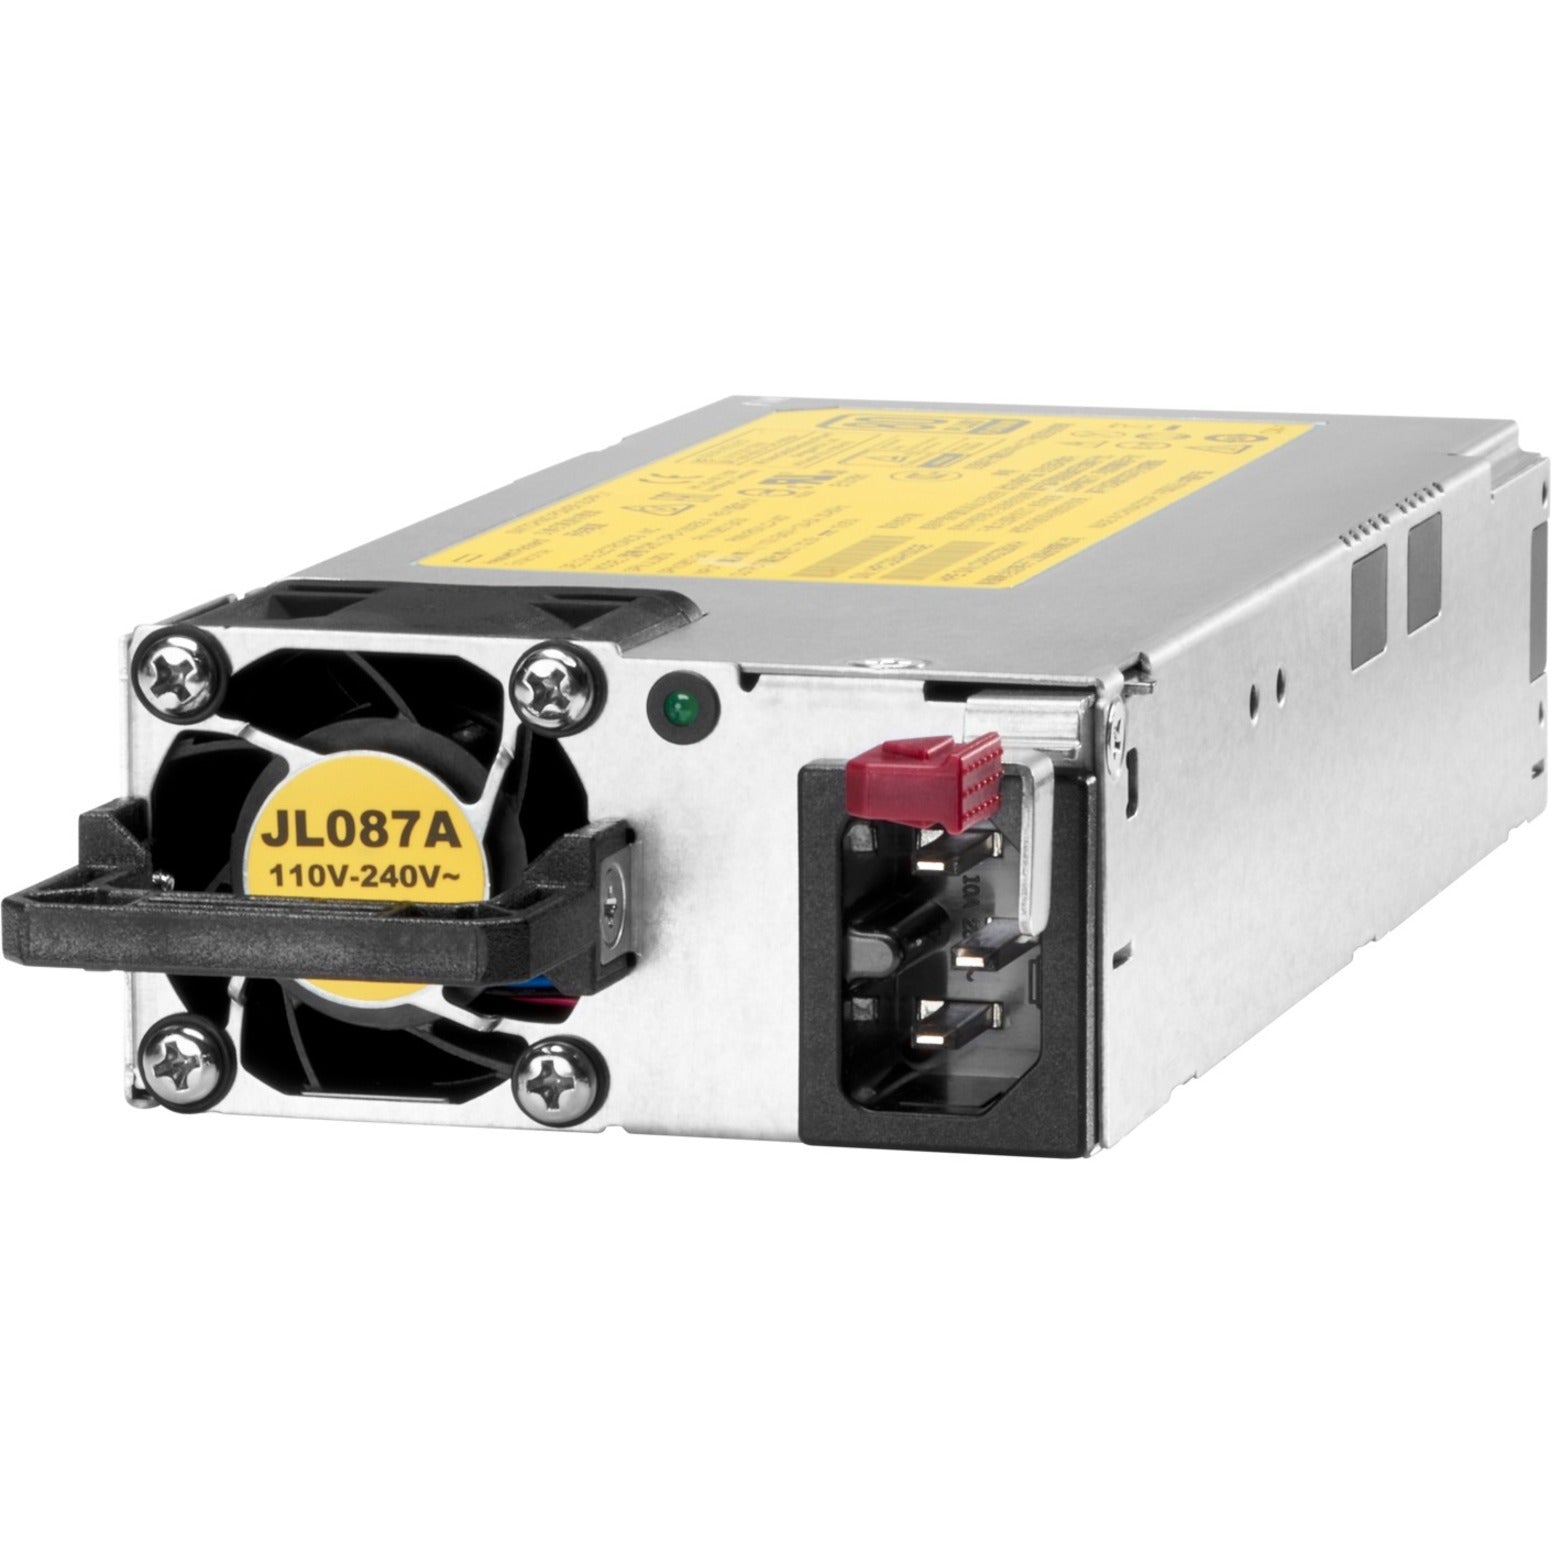 HPE E Aruba X372 54VDC 1050W 110-240VAC Power Supply (JL087A)